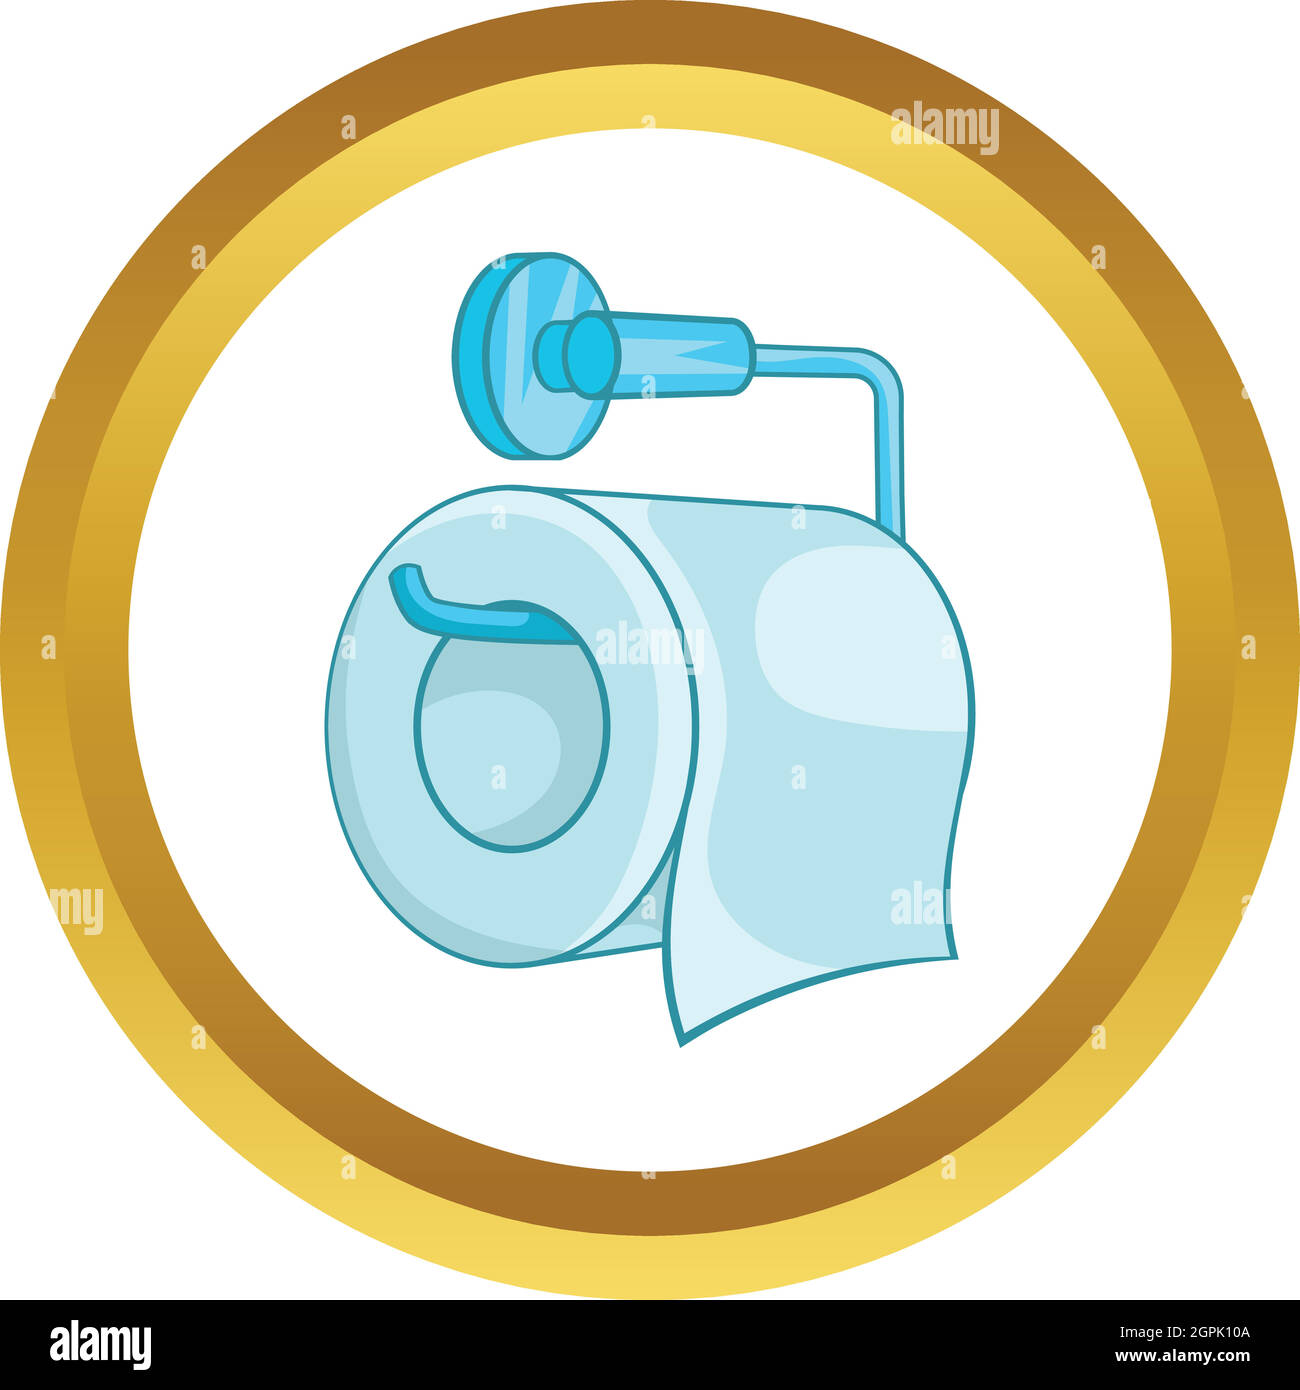 Toilet paper vector icon Stock Vector